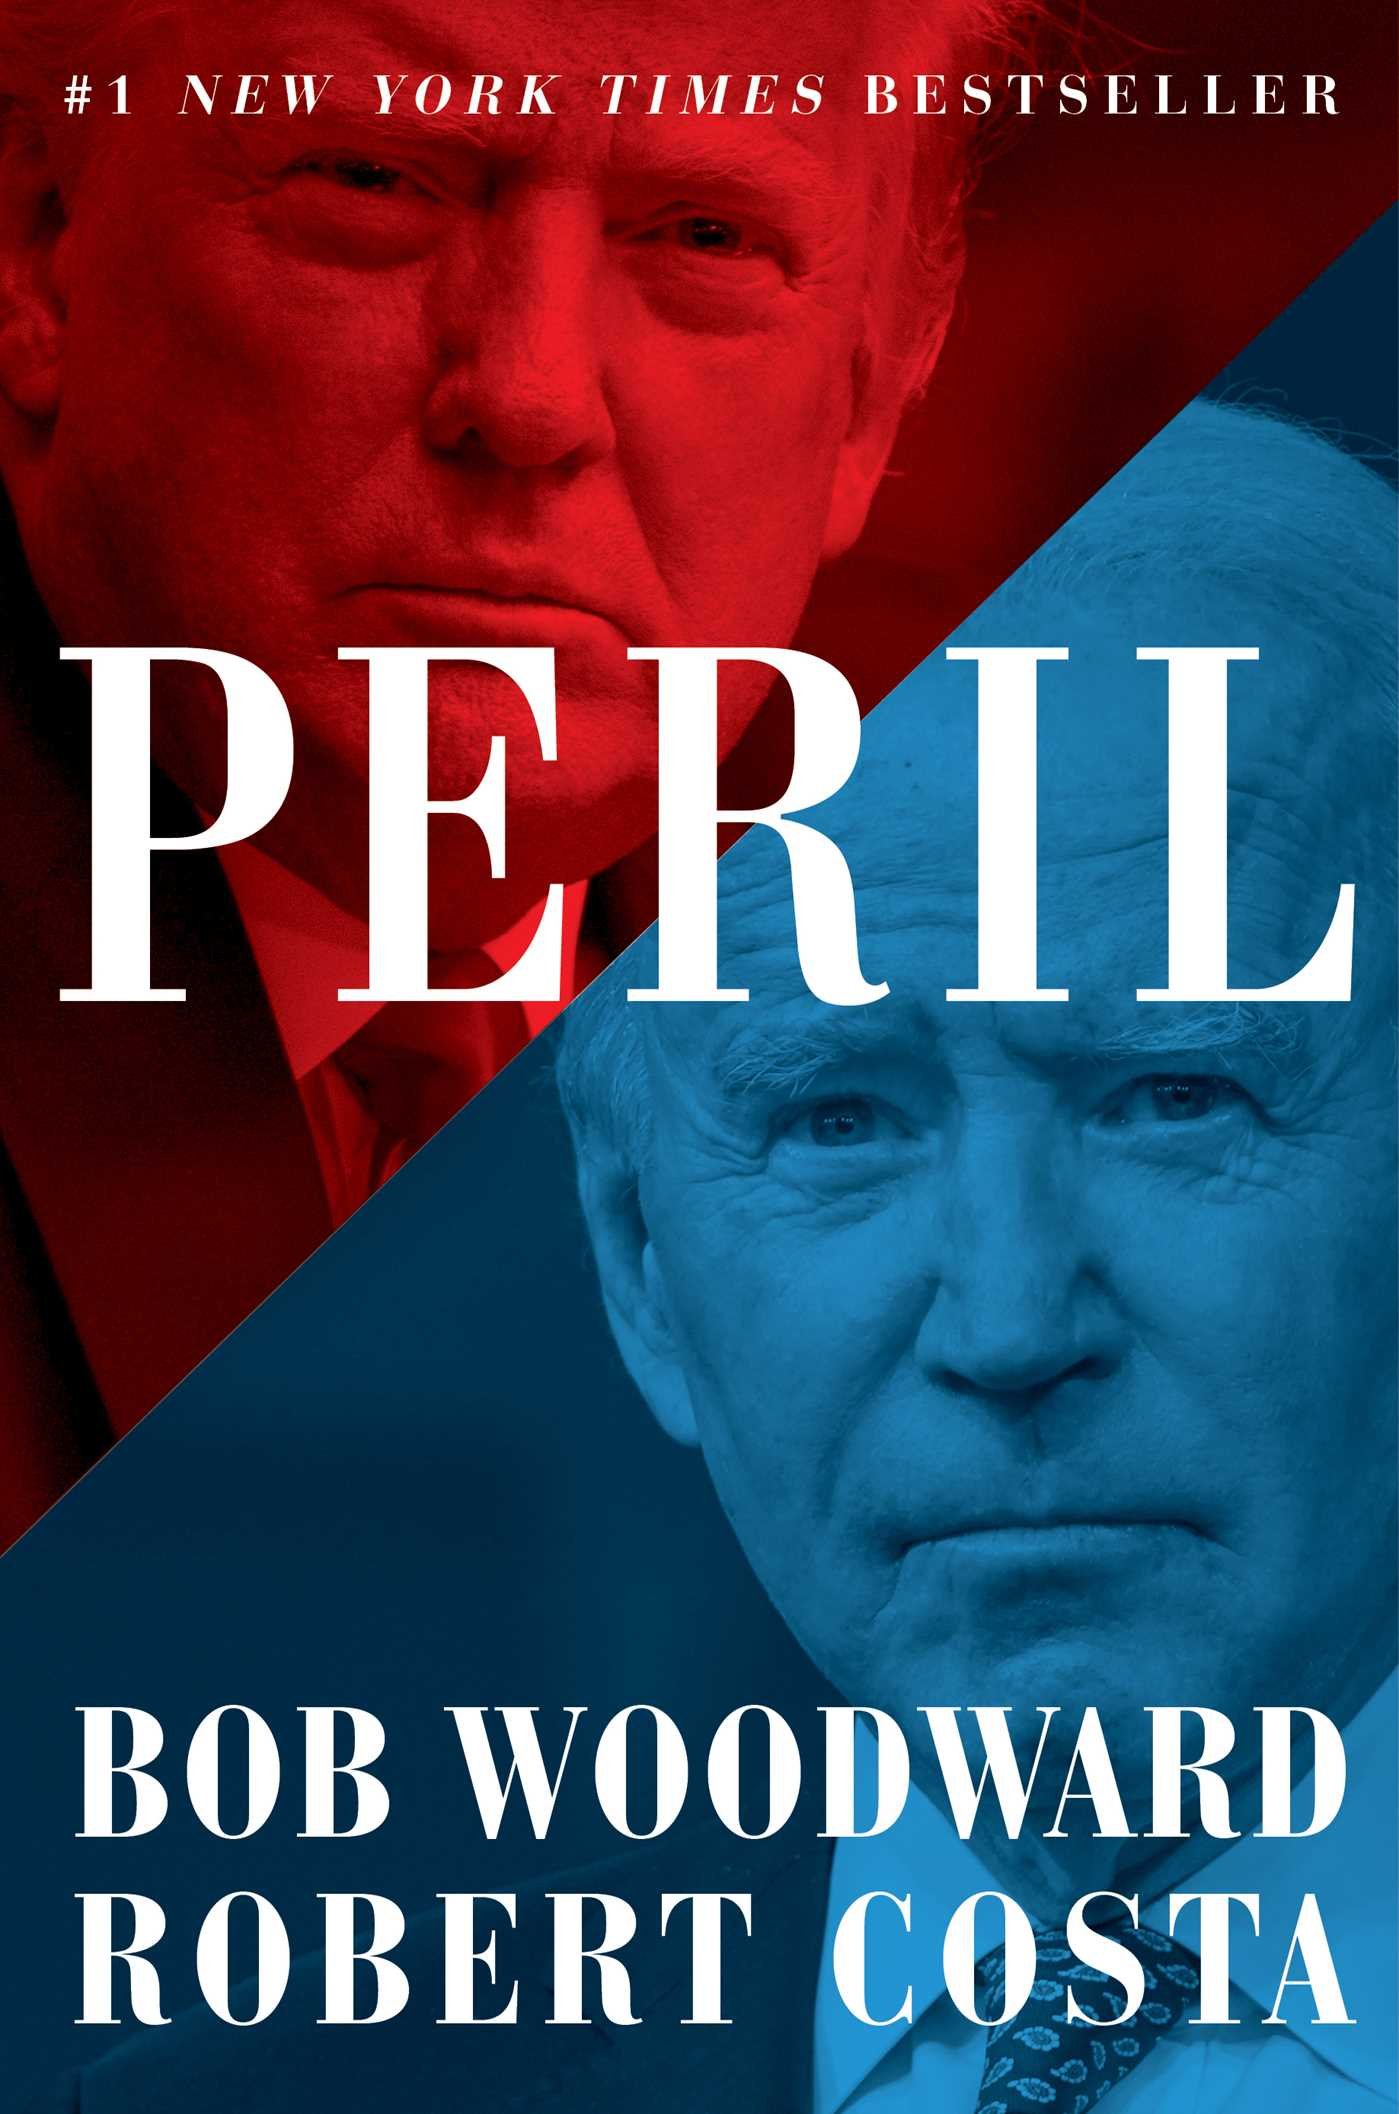 Bob Woodward - Wikipedia